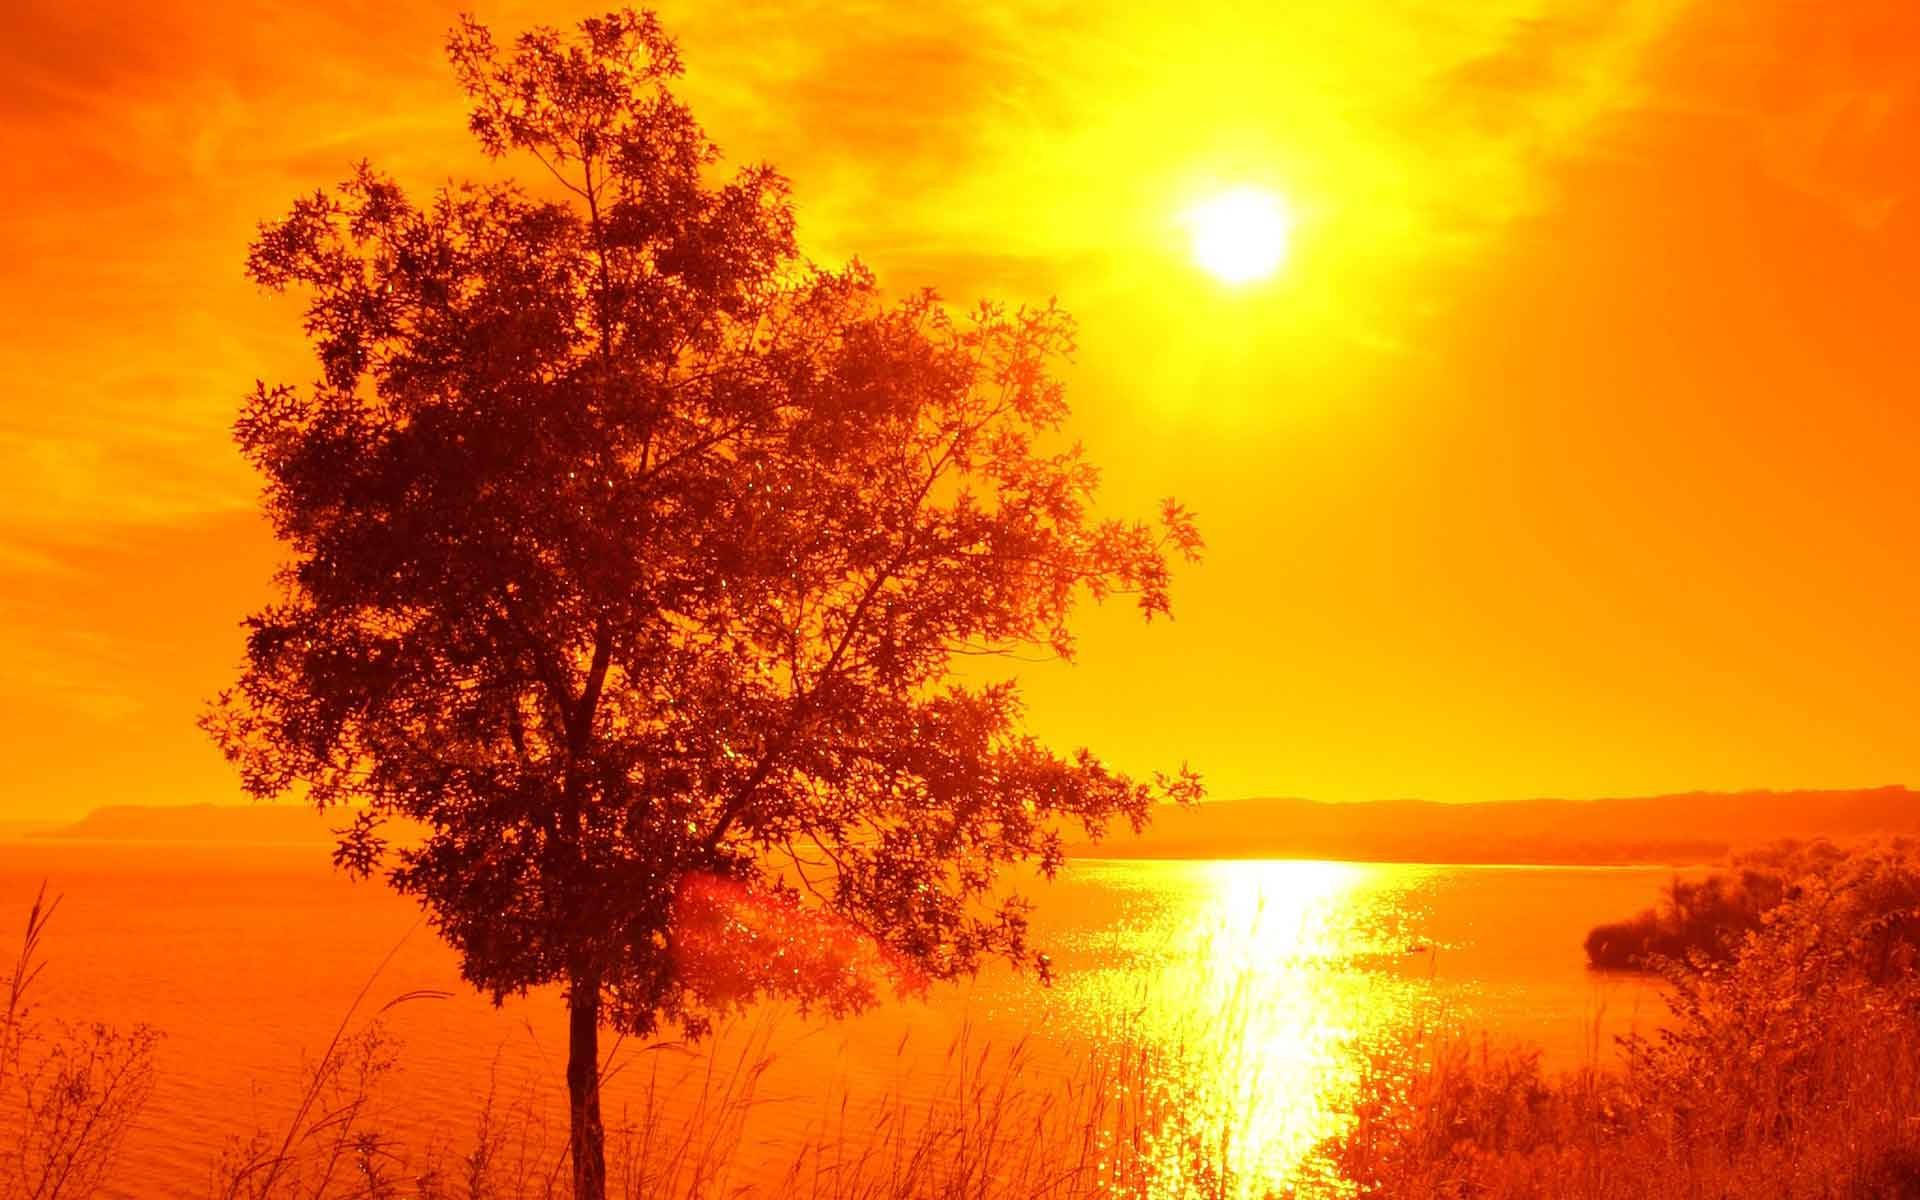 Orange-tinted Sunrise Nature